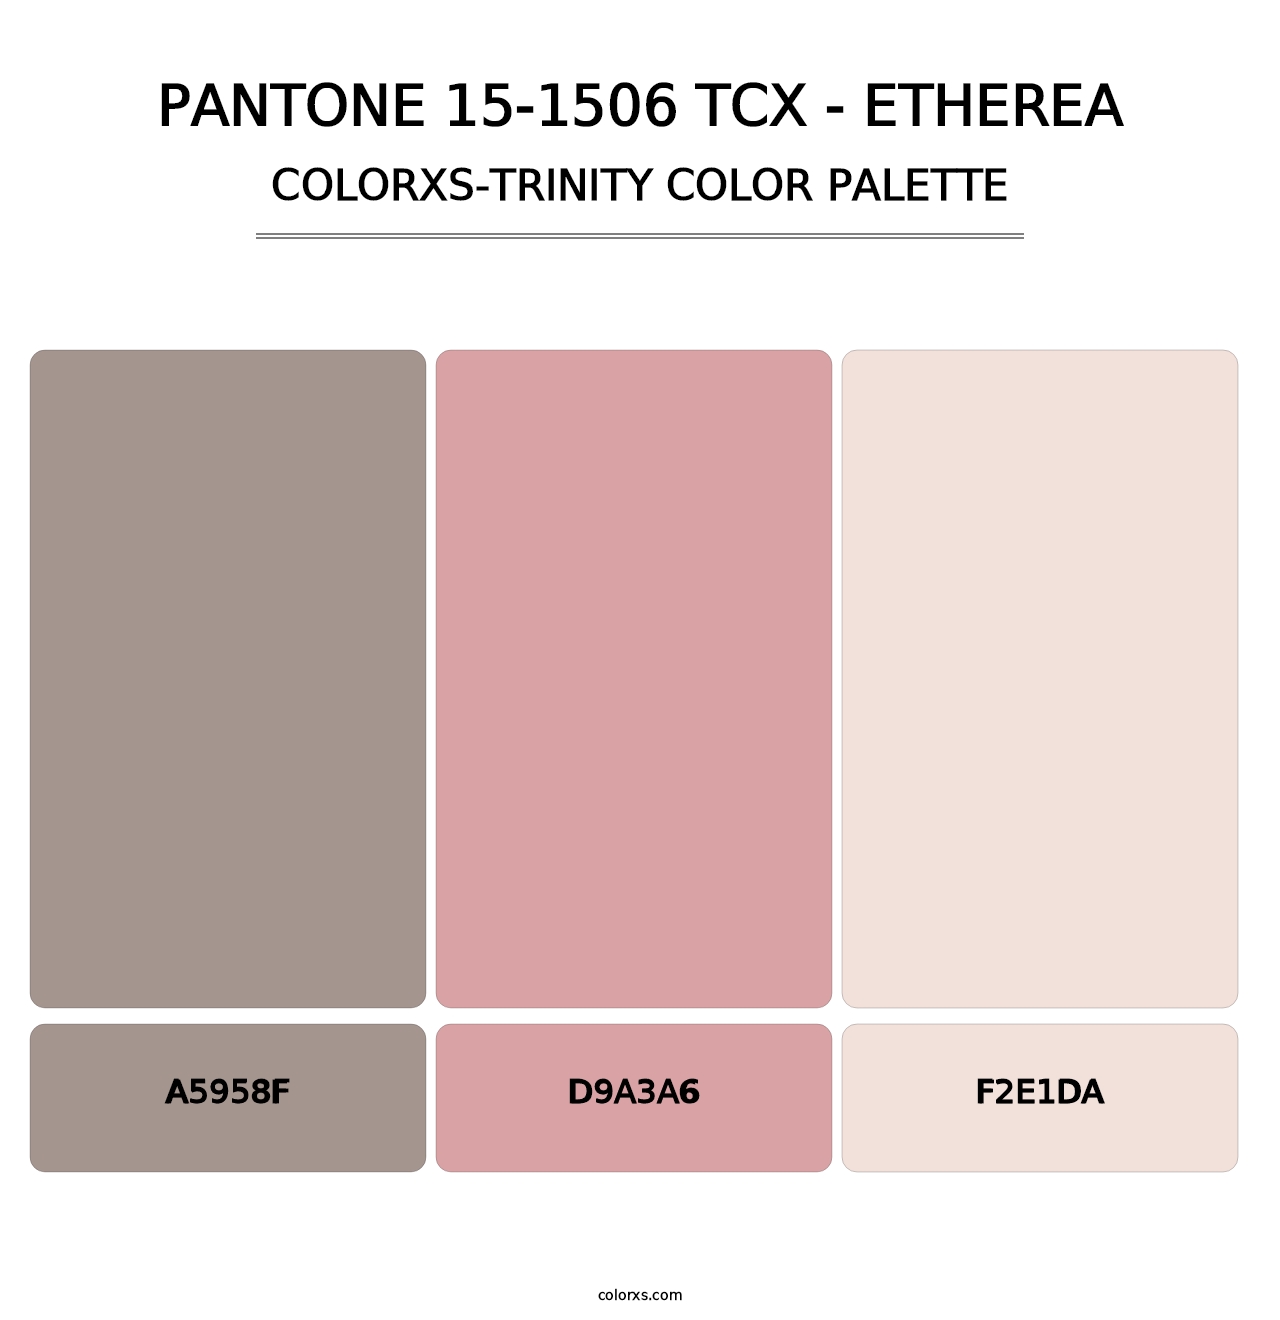 PANTONE 15-1506 TCX - Etherea - Colorxs Trinity Palette